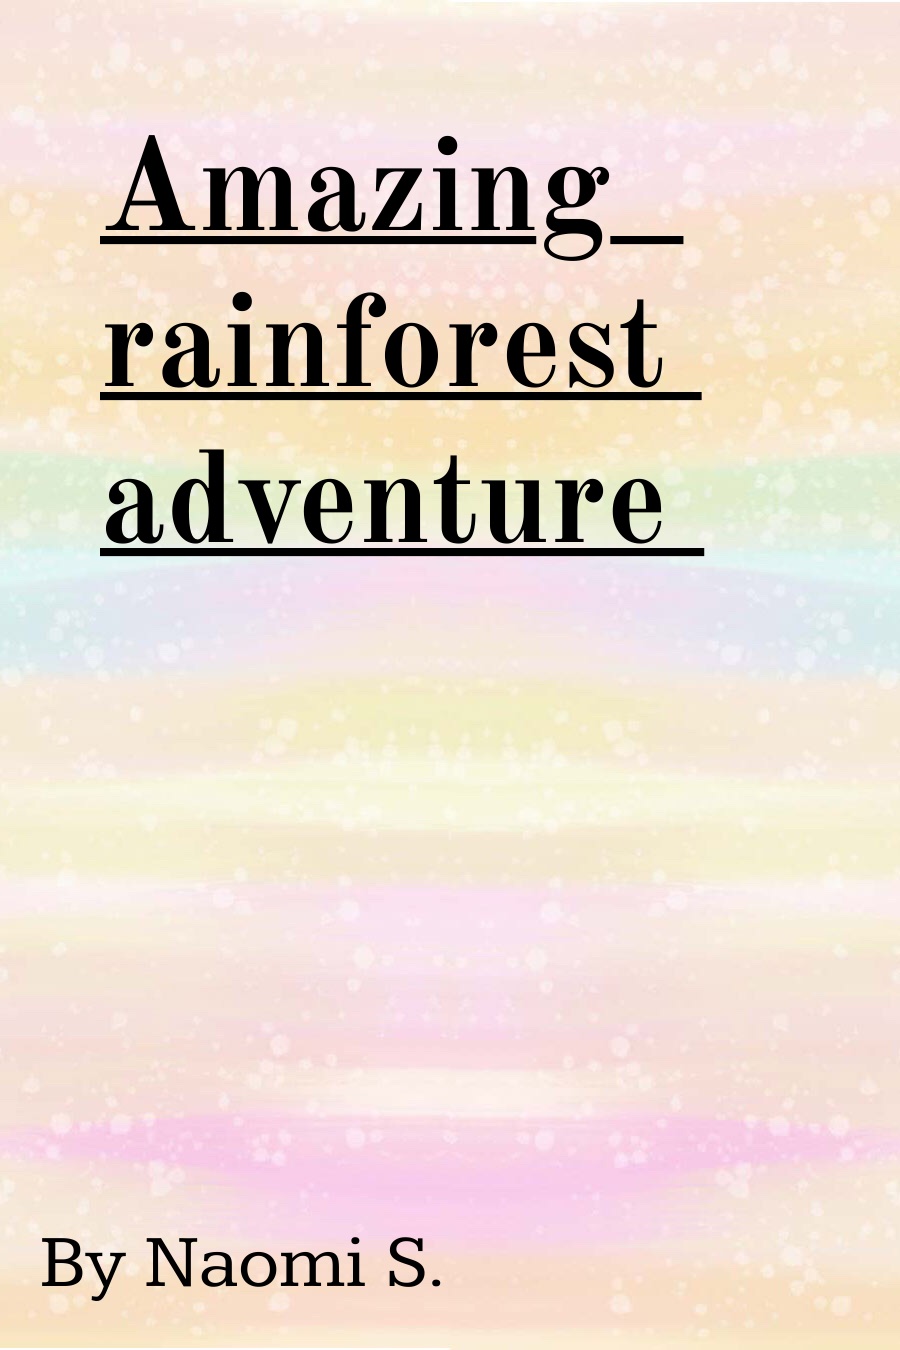 Amazing Rainforest by Naomi S